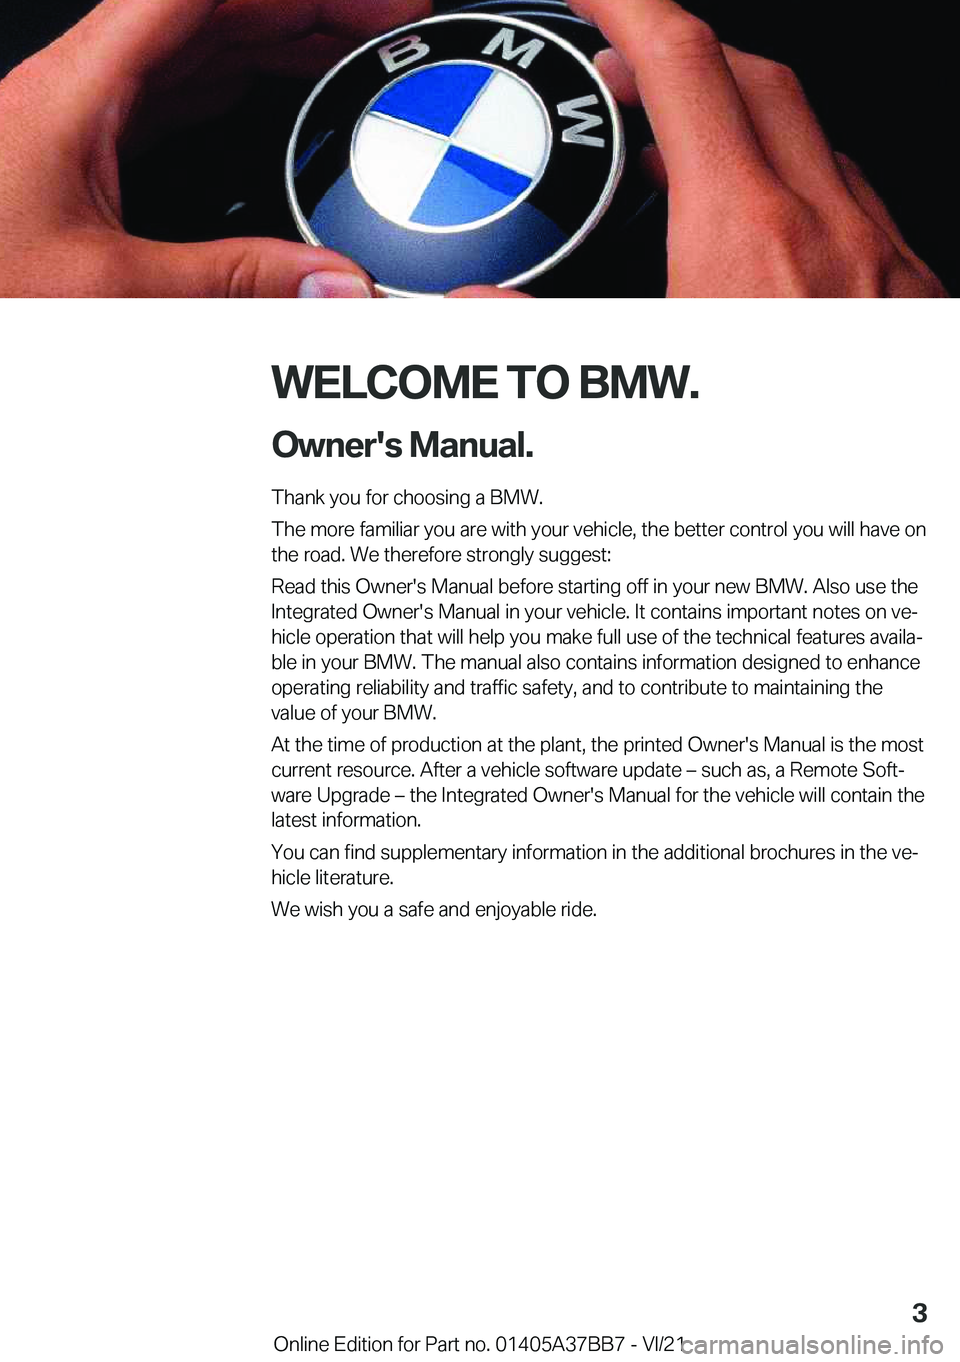 BMW M8 CONVERTIBLE 2022  Owners Manual �W�E�L�C�O�M�E��T�O��B�M�W�.�O�w�n�e�r�'�s��M�a�n�u�a�l�.
�T�h�a�n�k��y�o�u��f�o�r��c�h�o�o�s�i�n�g��a��B�M�W�.
�T�h�e��m�o�r�e��f�a�m�i�l�i�a�r��y�o�u��a�r�e��w�i�t�h��y�o�u�r��v�e